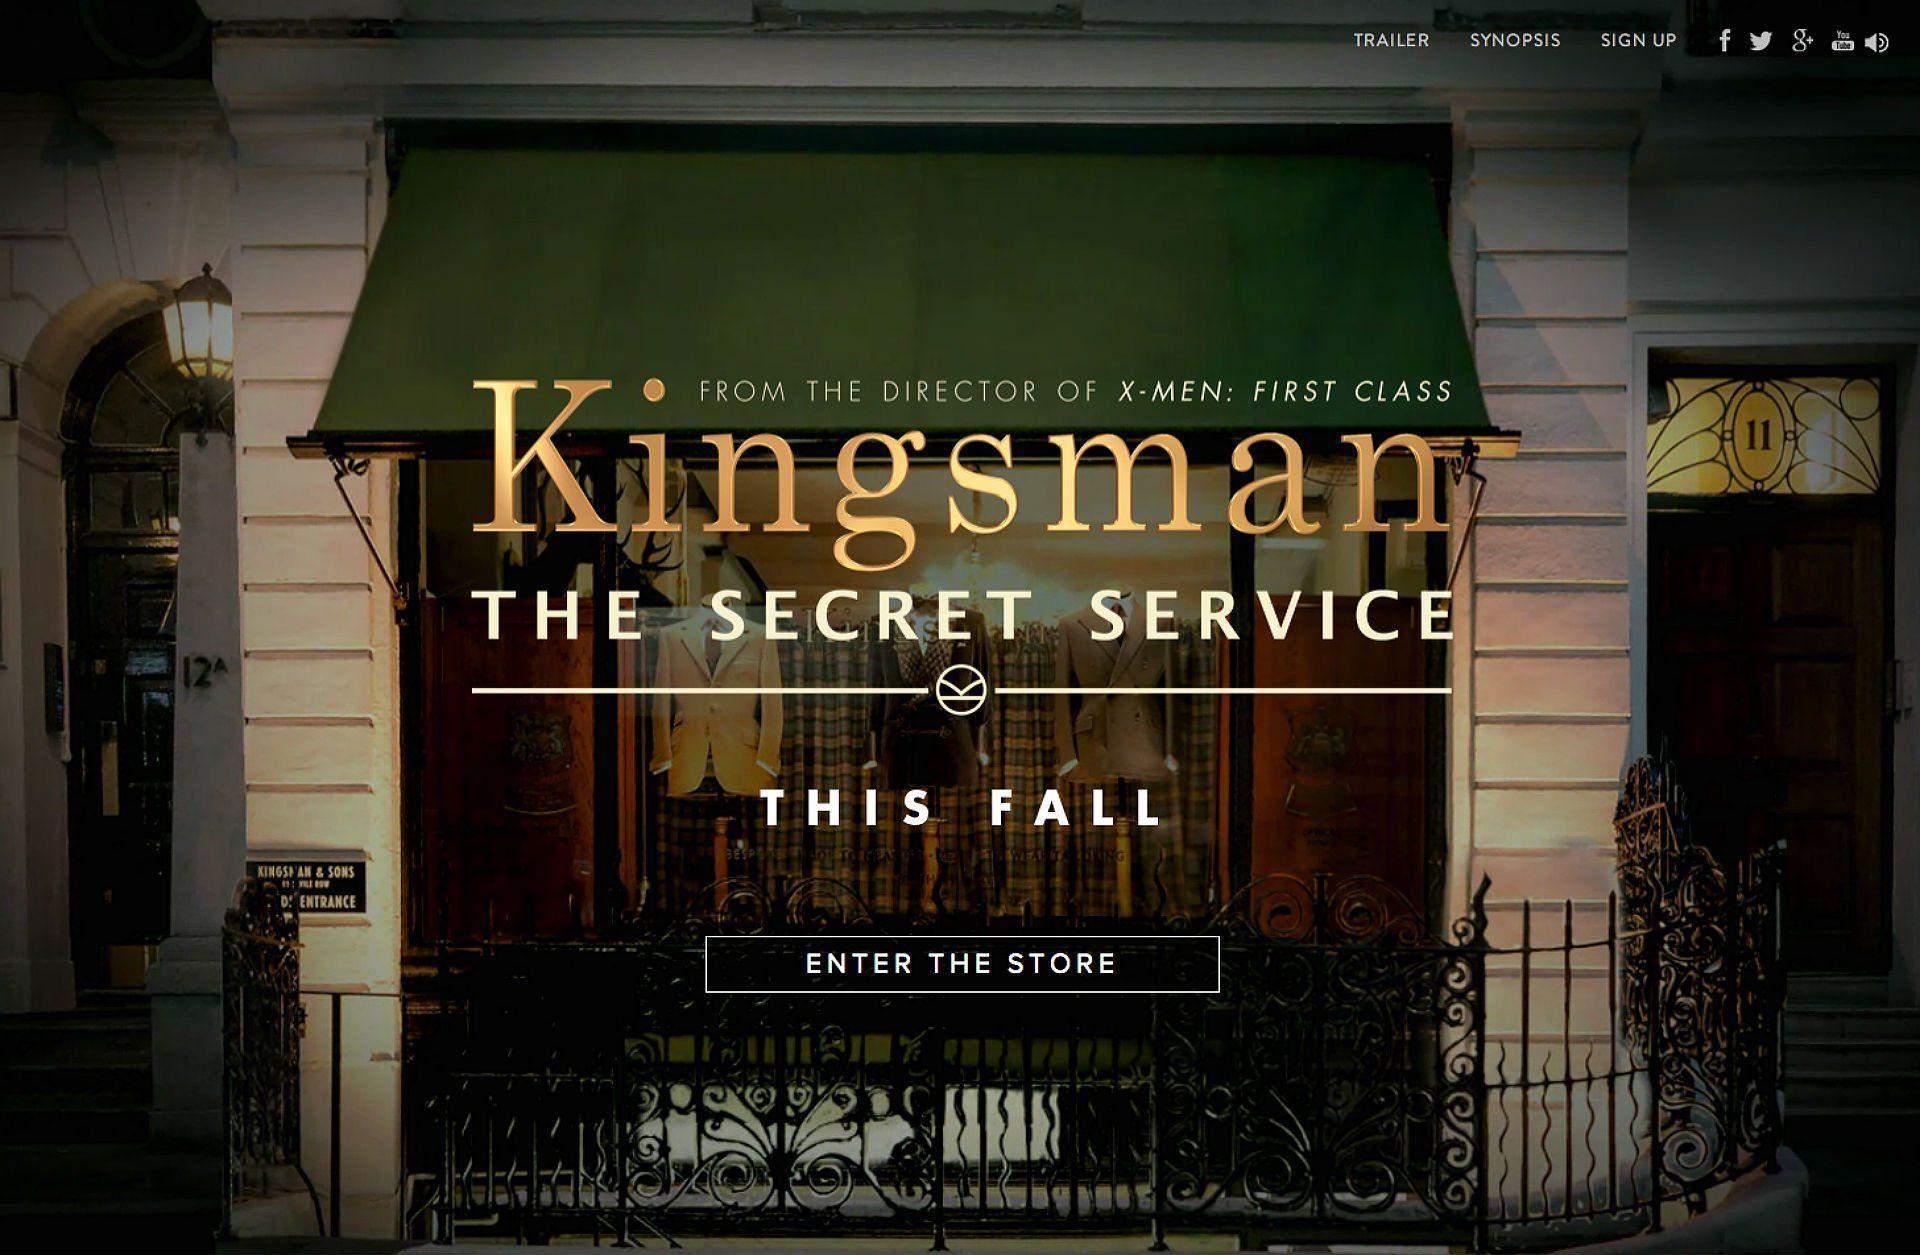 KINGSMAN SECRET SERVICE Action Adventure Comedy Spy Crime Kingsman